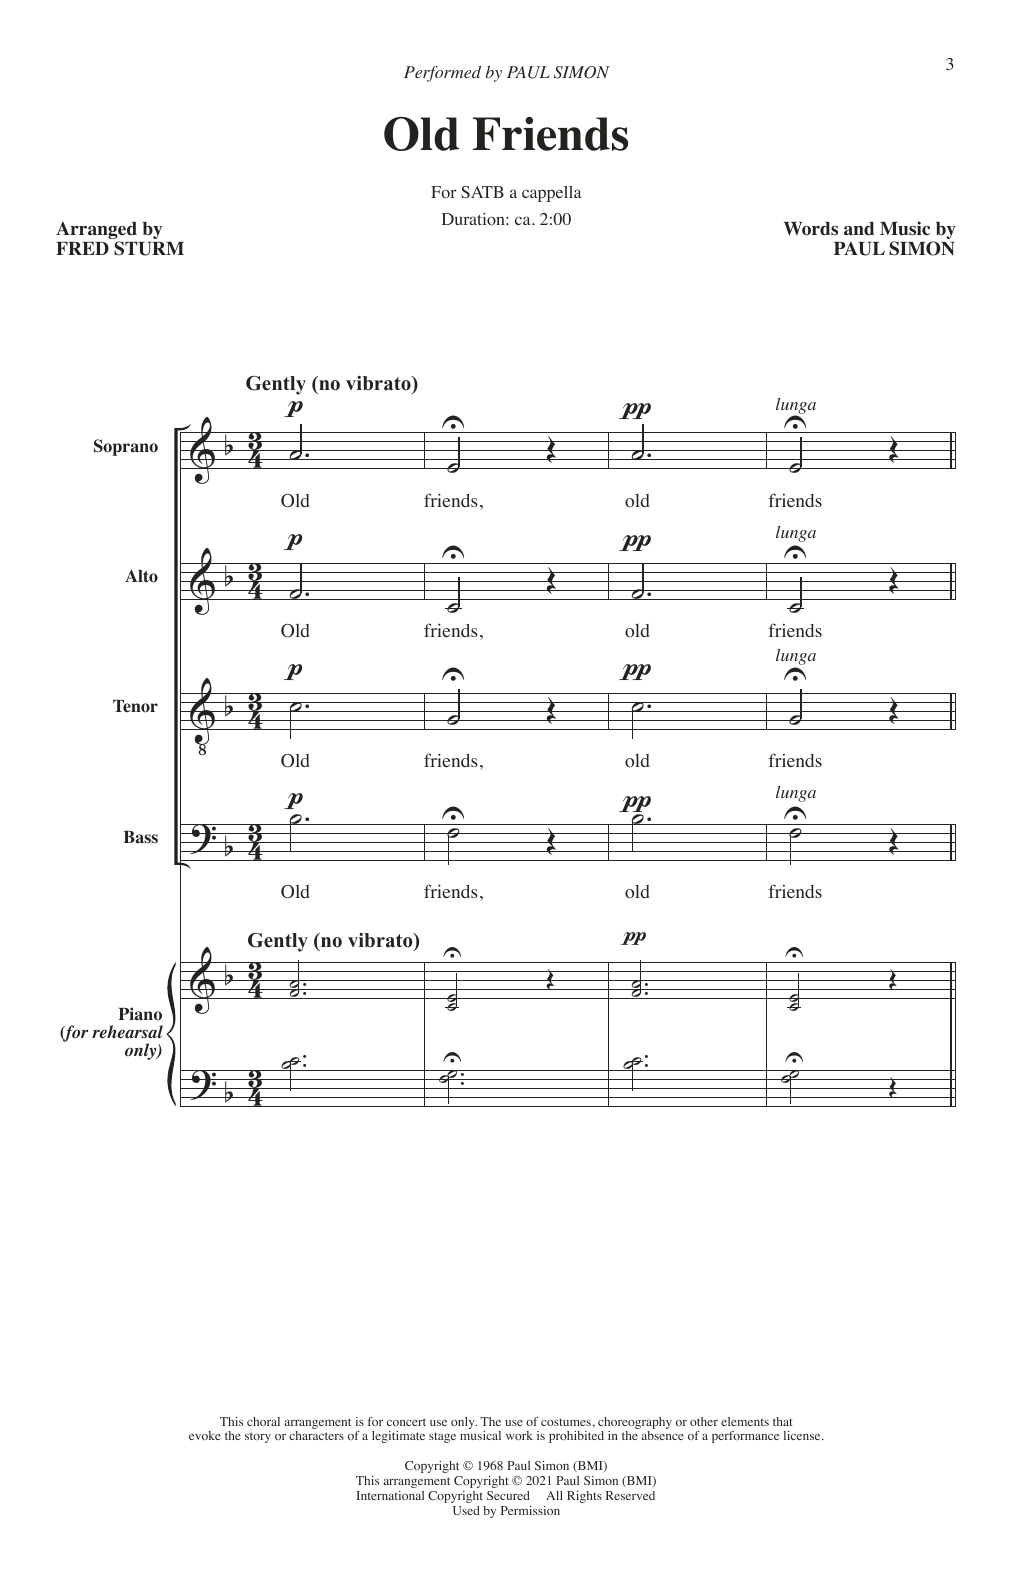 Simon & Garfunkel Old Friends (arr. Fred Sturm) Sheet Music Notes & Chords for SATB Choir - Download or Print PDF